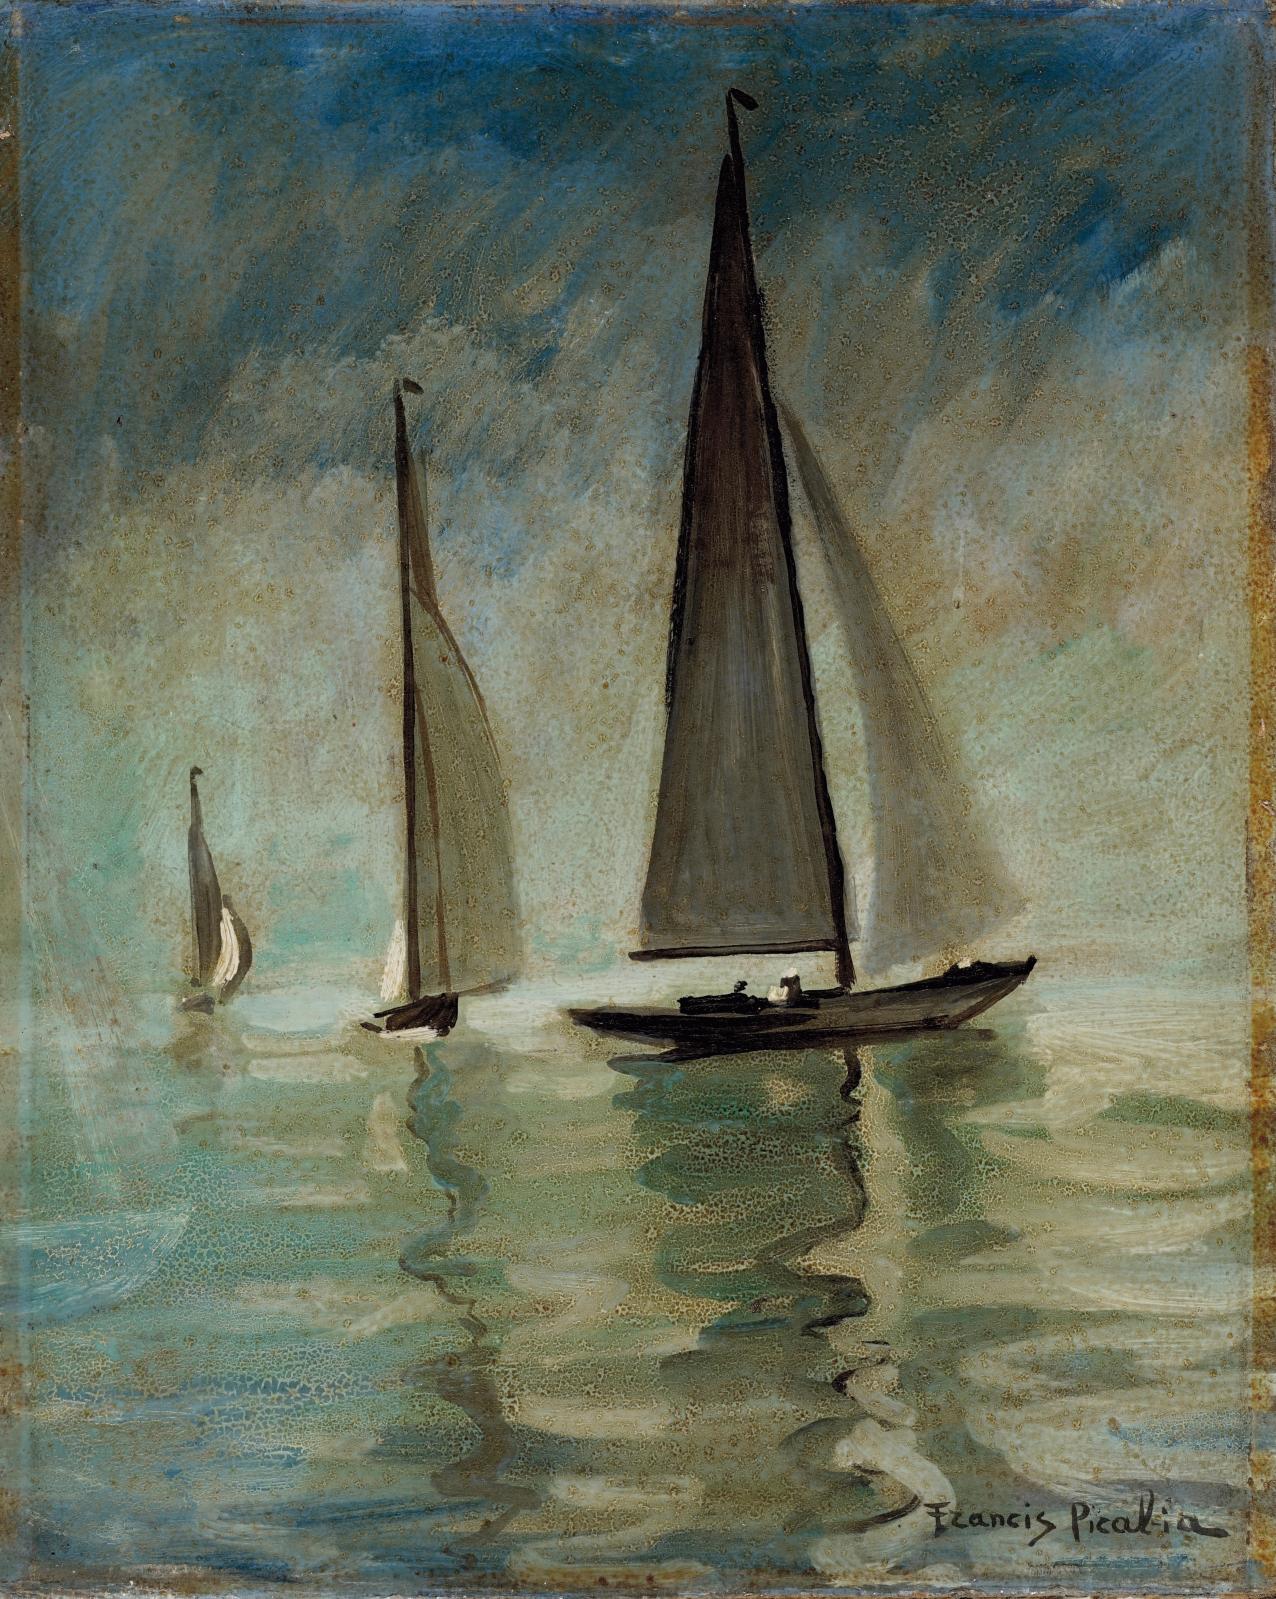 Une marine de Francis Picabia